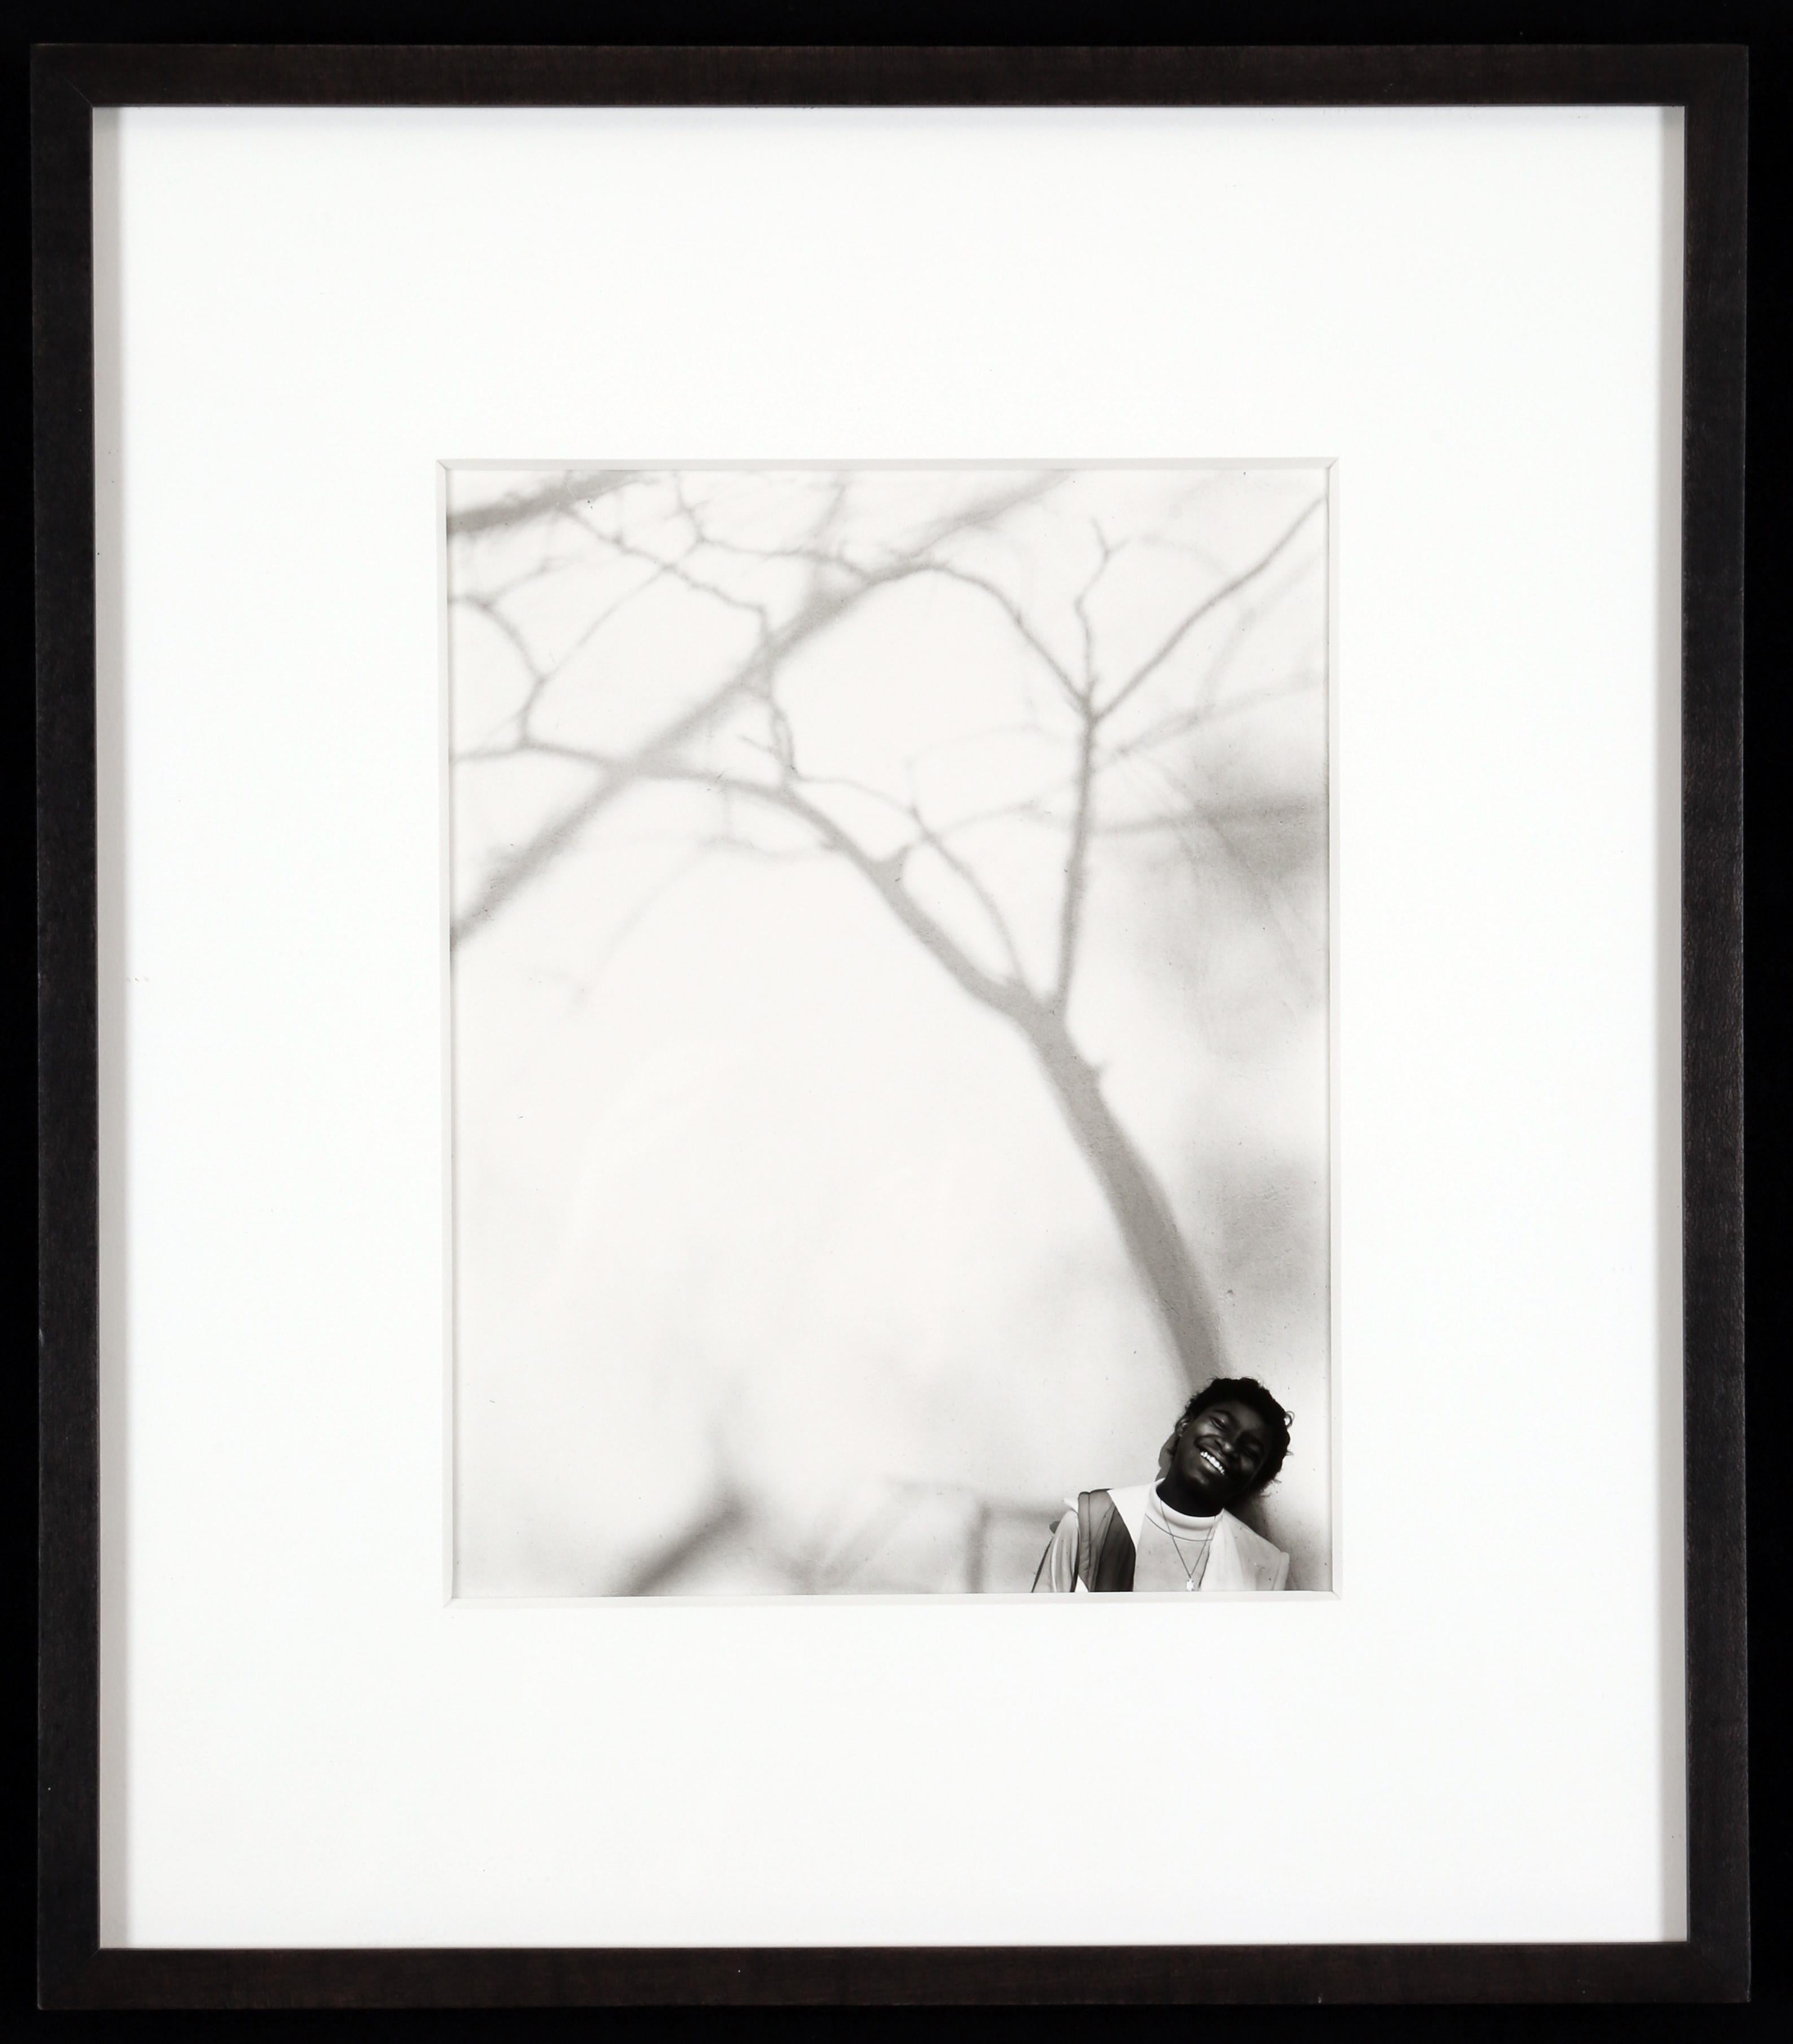 Tara and Tree Shadow - Photograph by Sally Mann